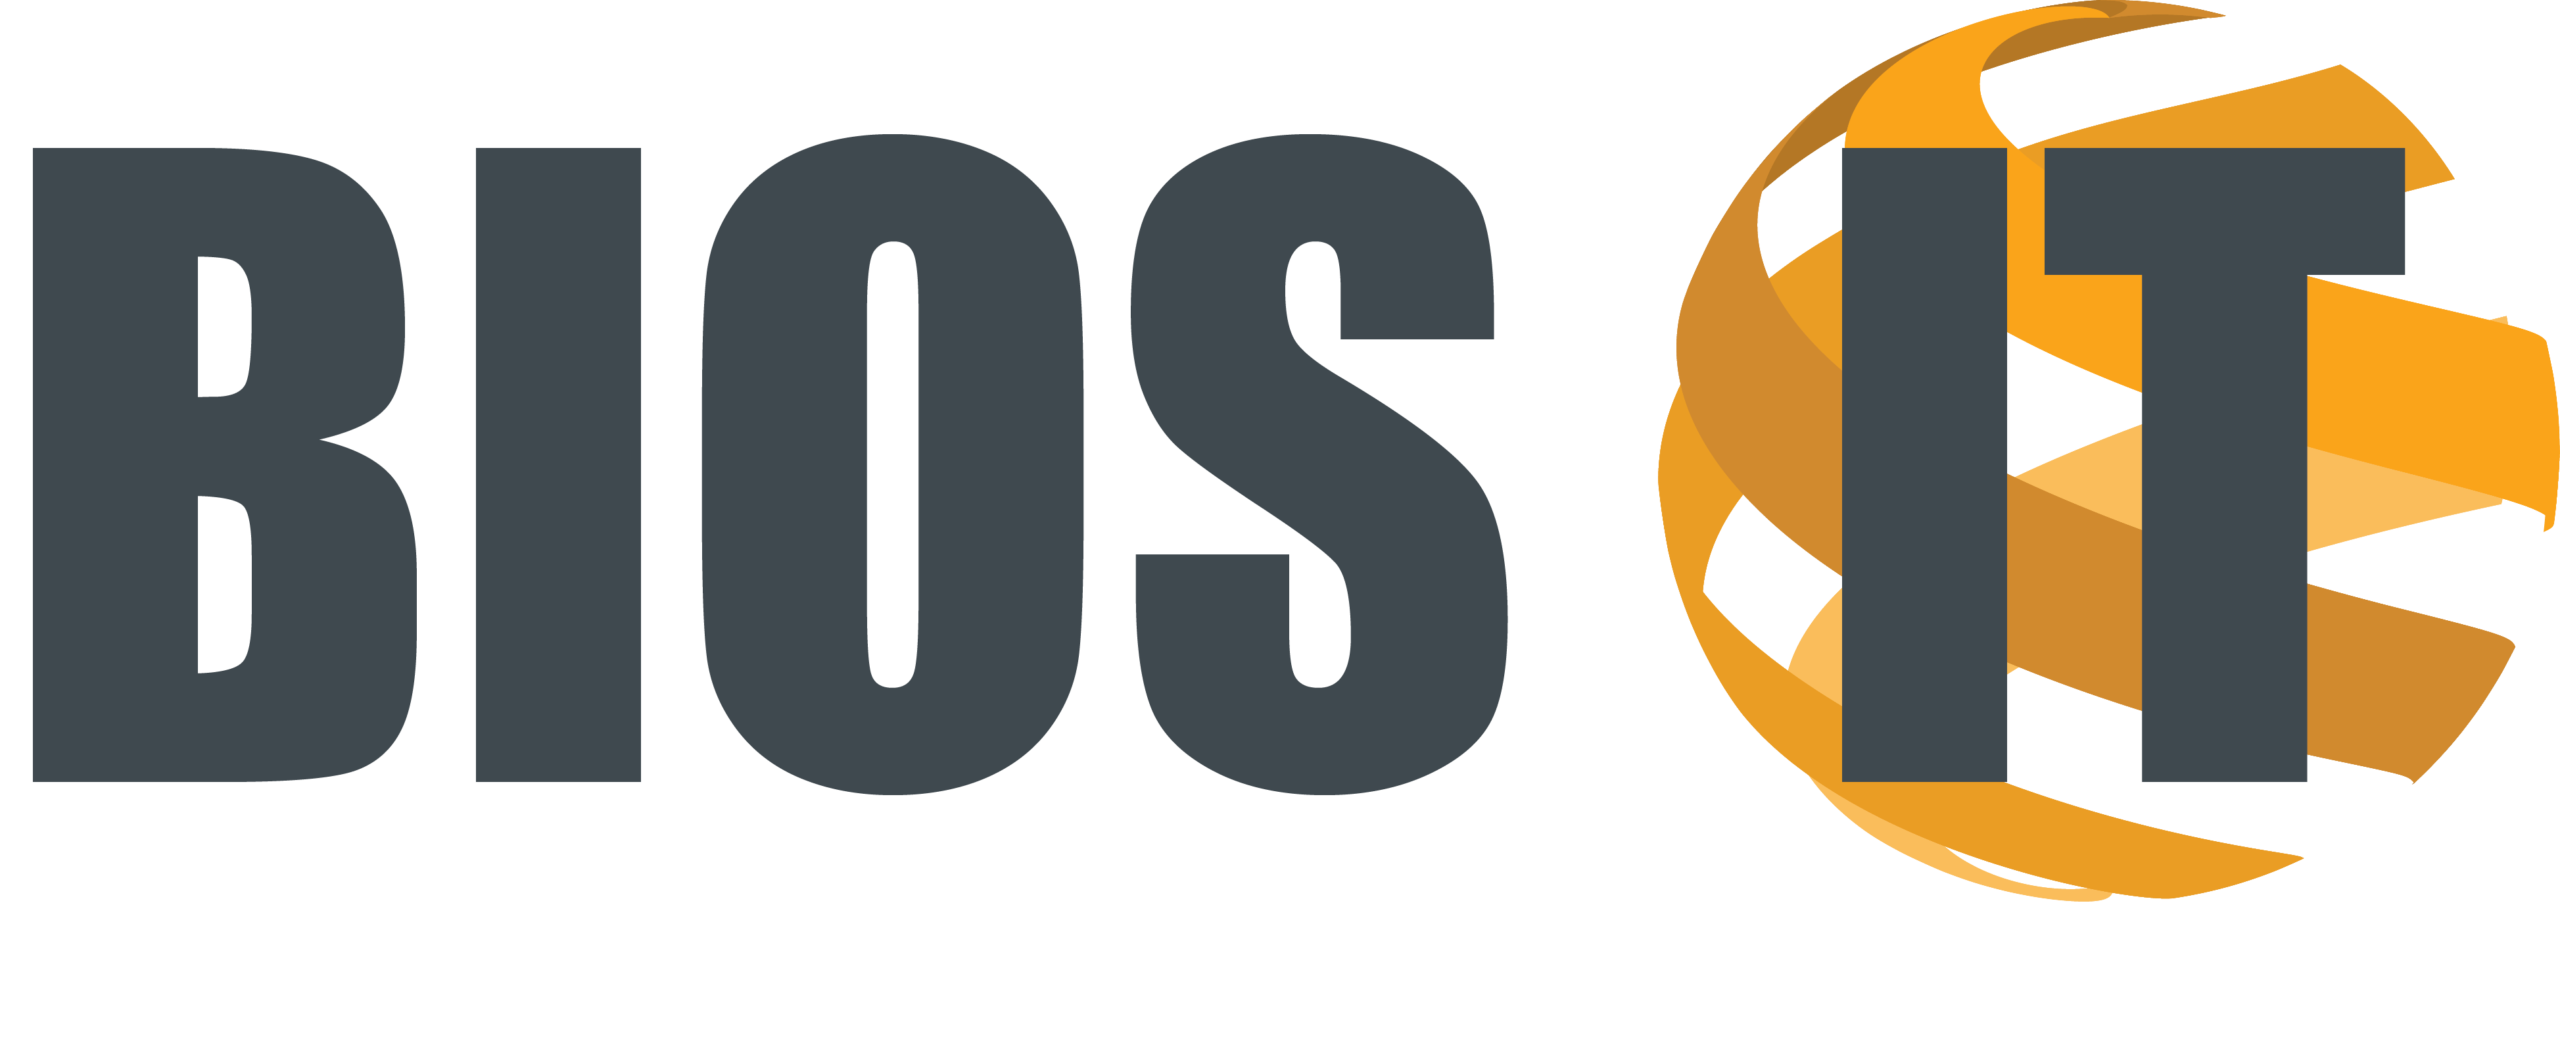 bios logo